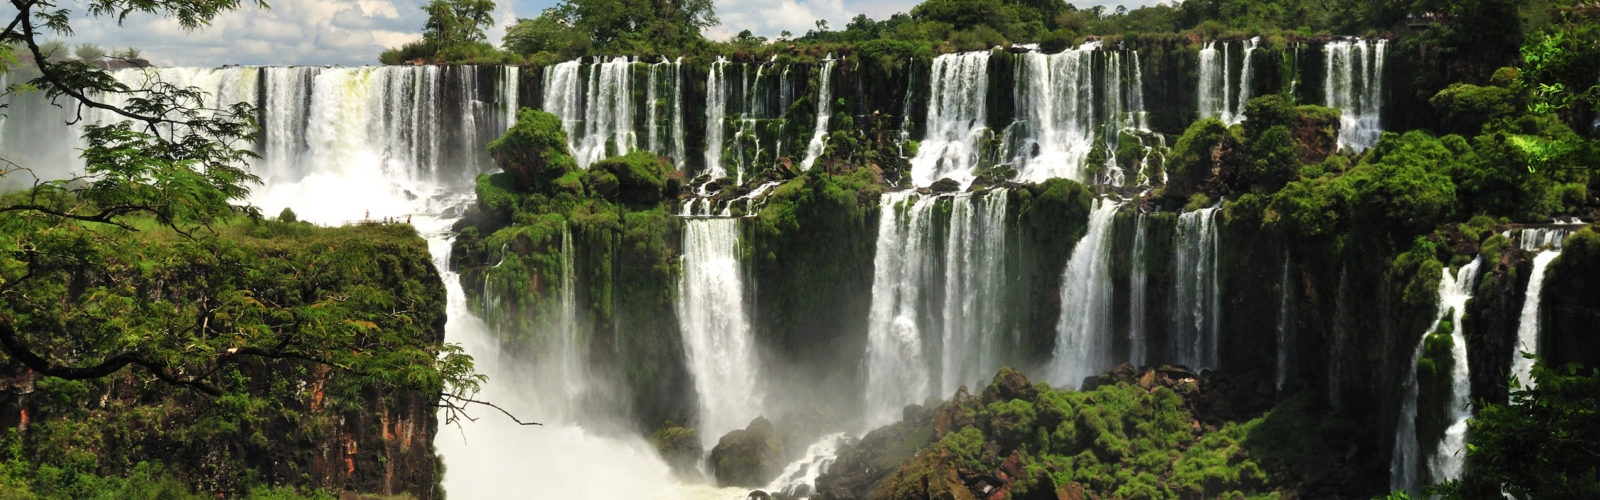 iguassu-falls-brazil